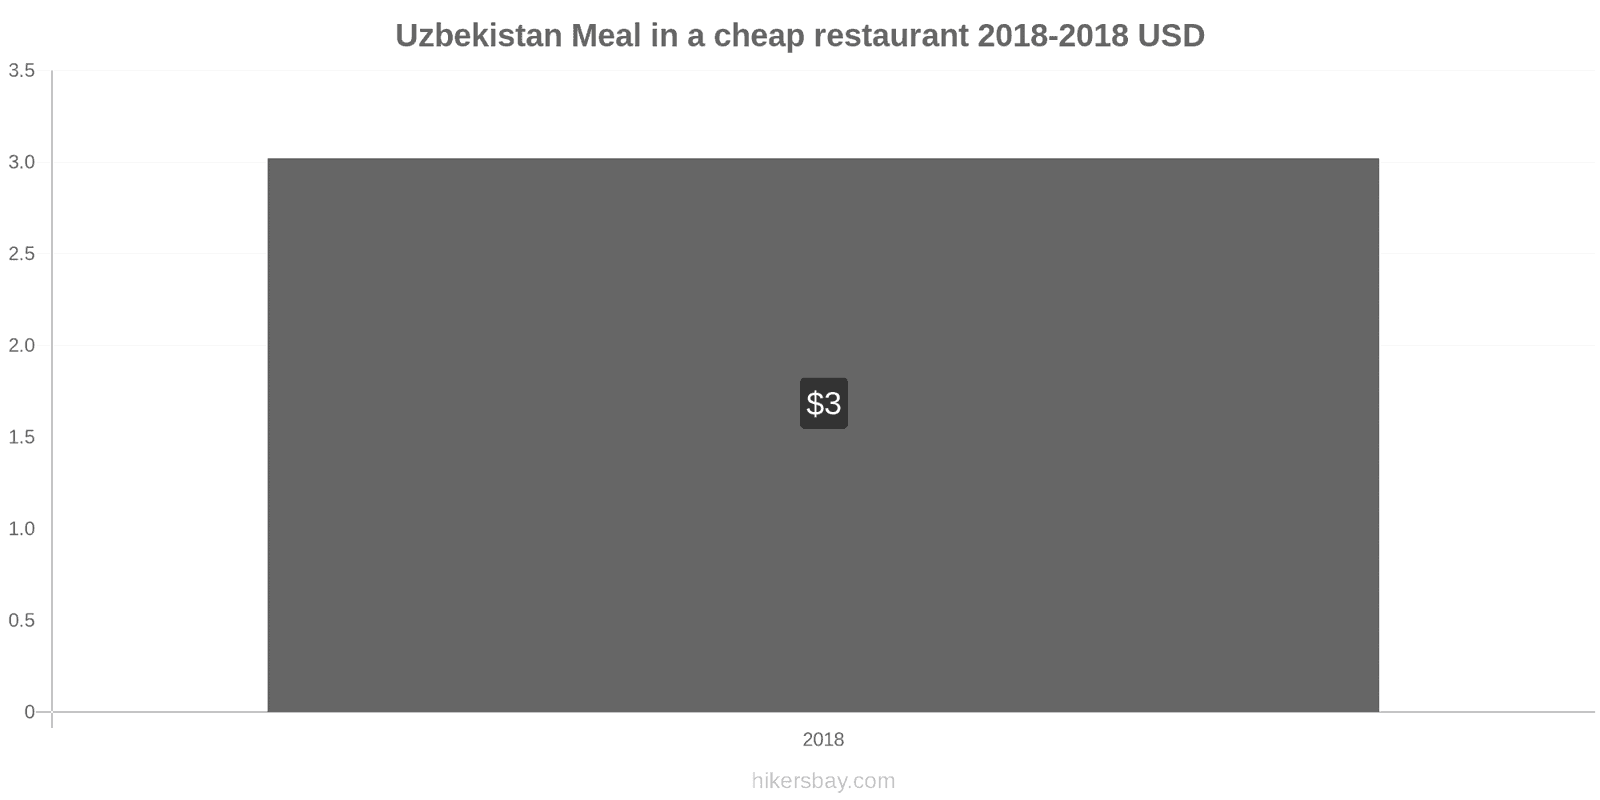 Uzbekistan price changes Meal in a cheap restaurant hikersbay.com